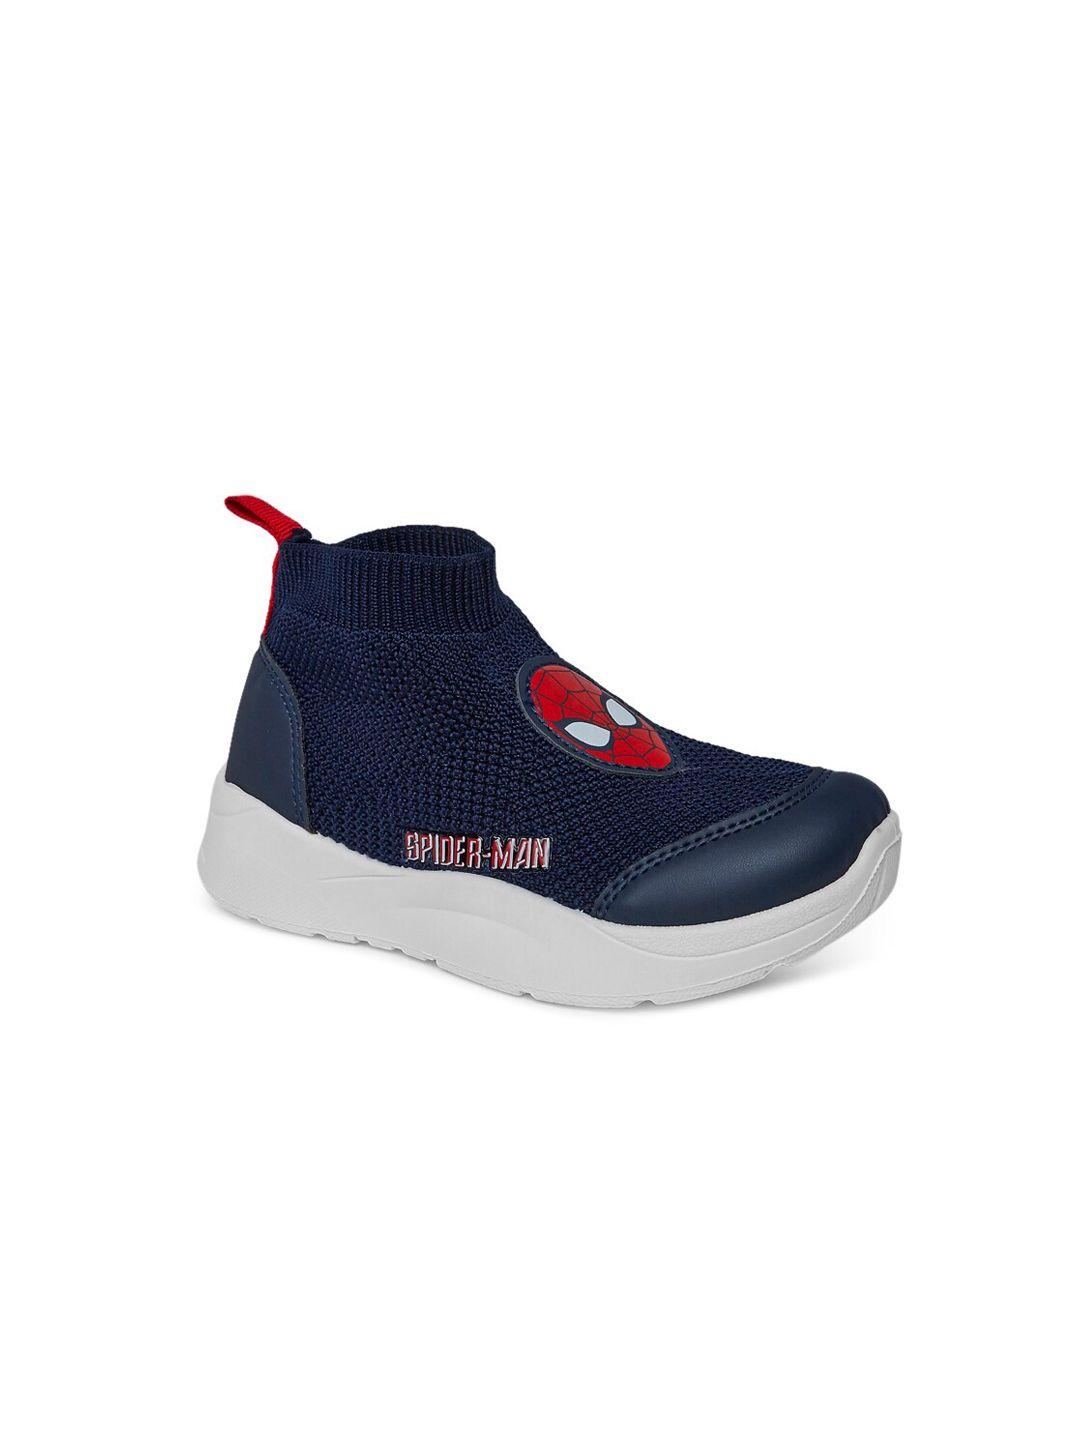 pantaloons junior boys navy blue woven design pu slip-on sneakers